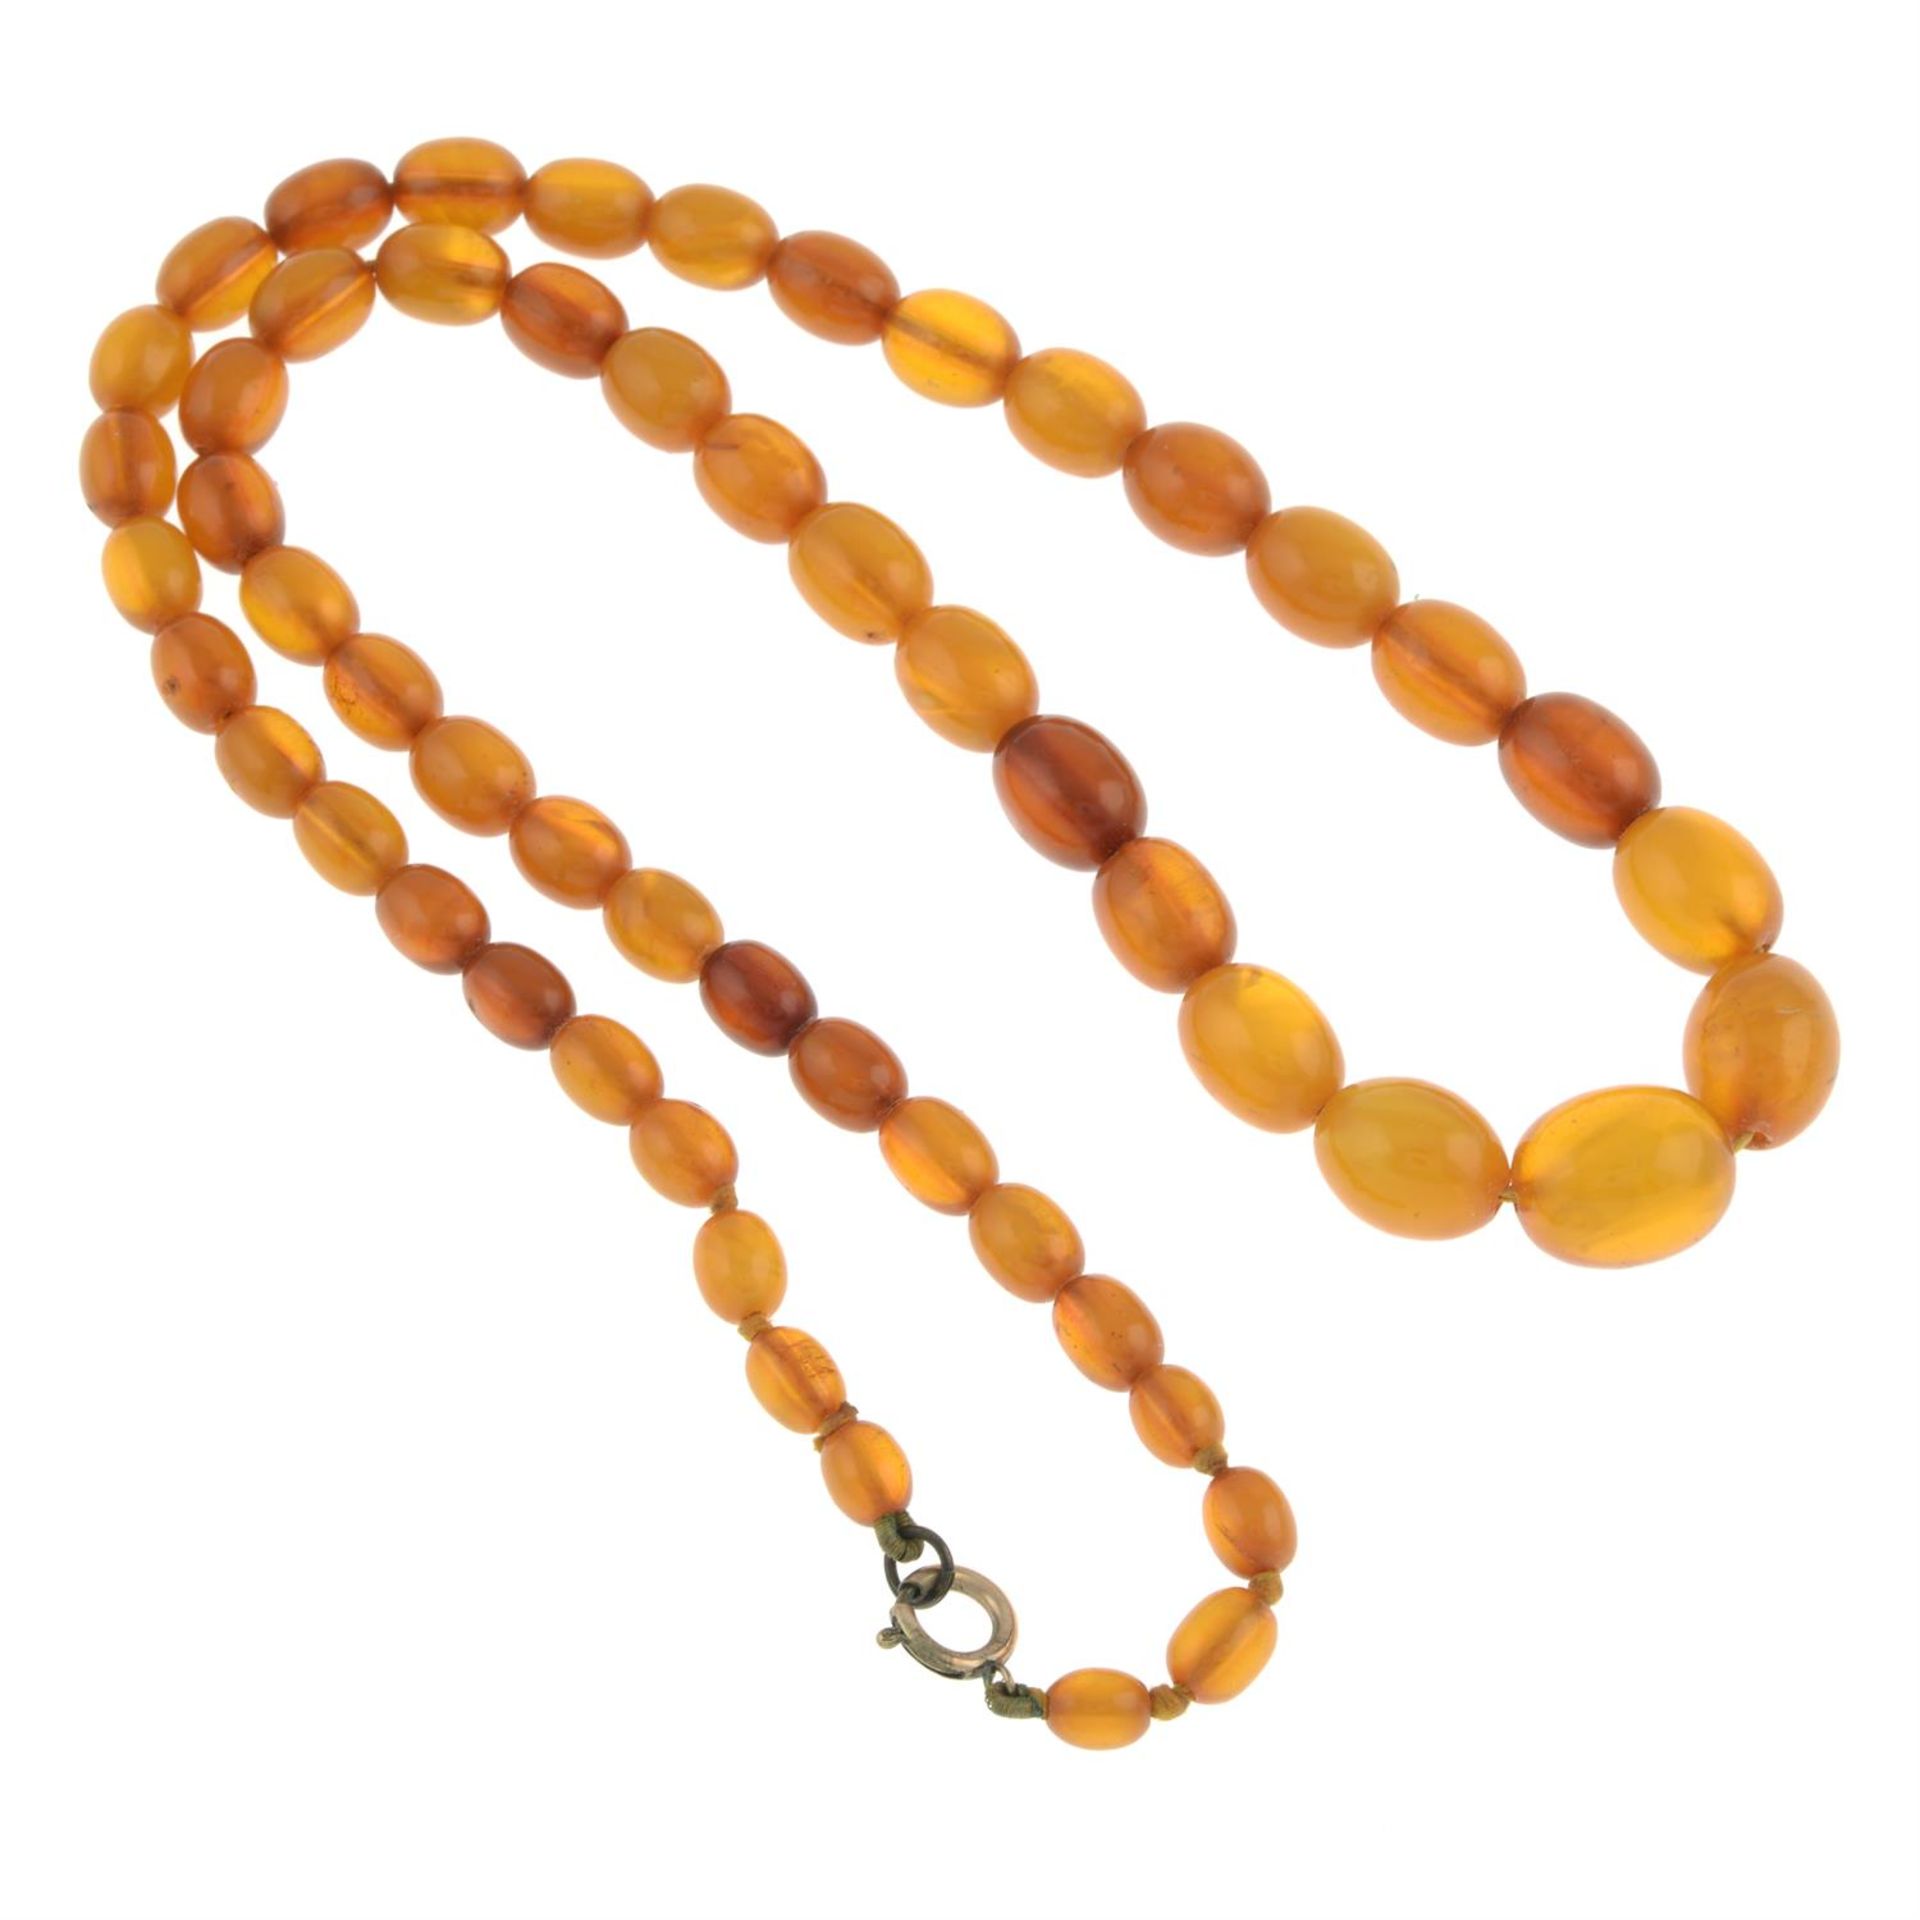 Amber single-strand necklace - Image 2 of 2